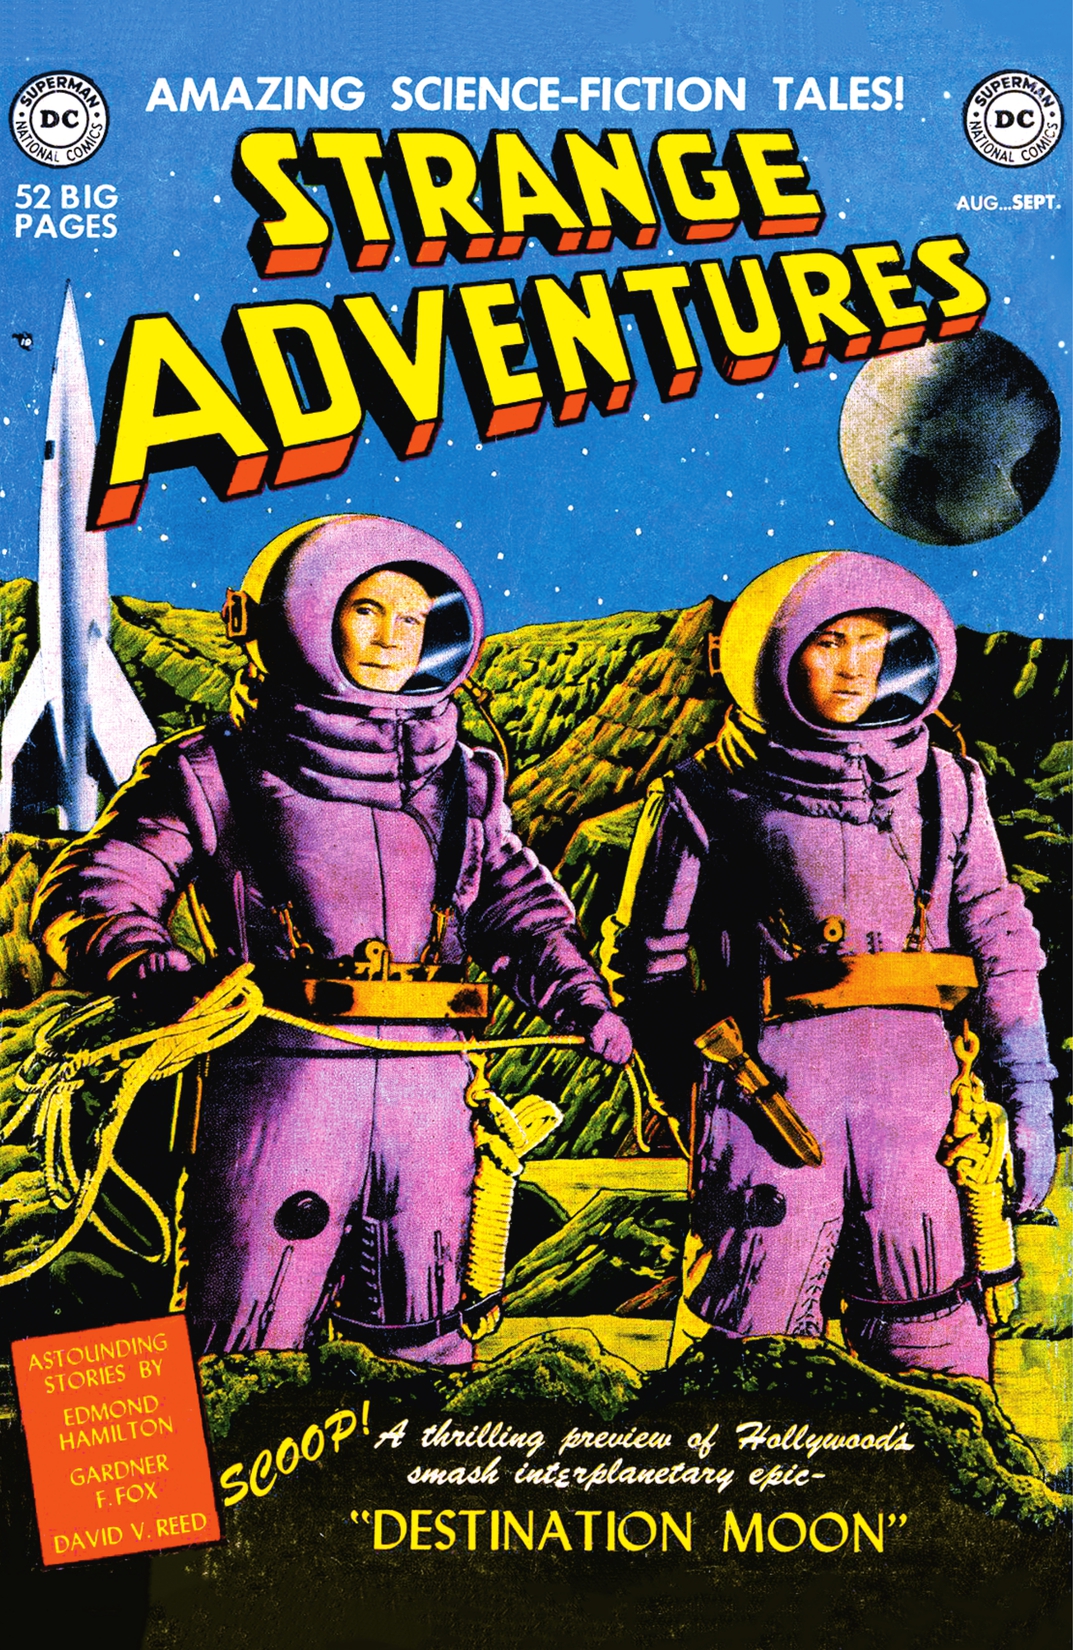 Strange Adventures (1950-1973) #1 preview images